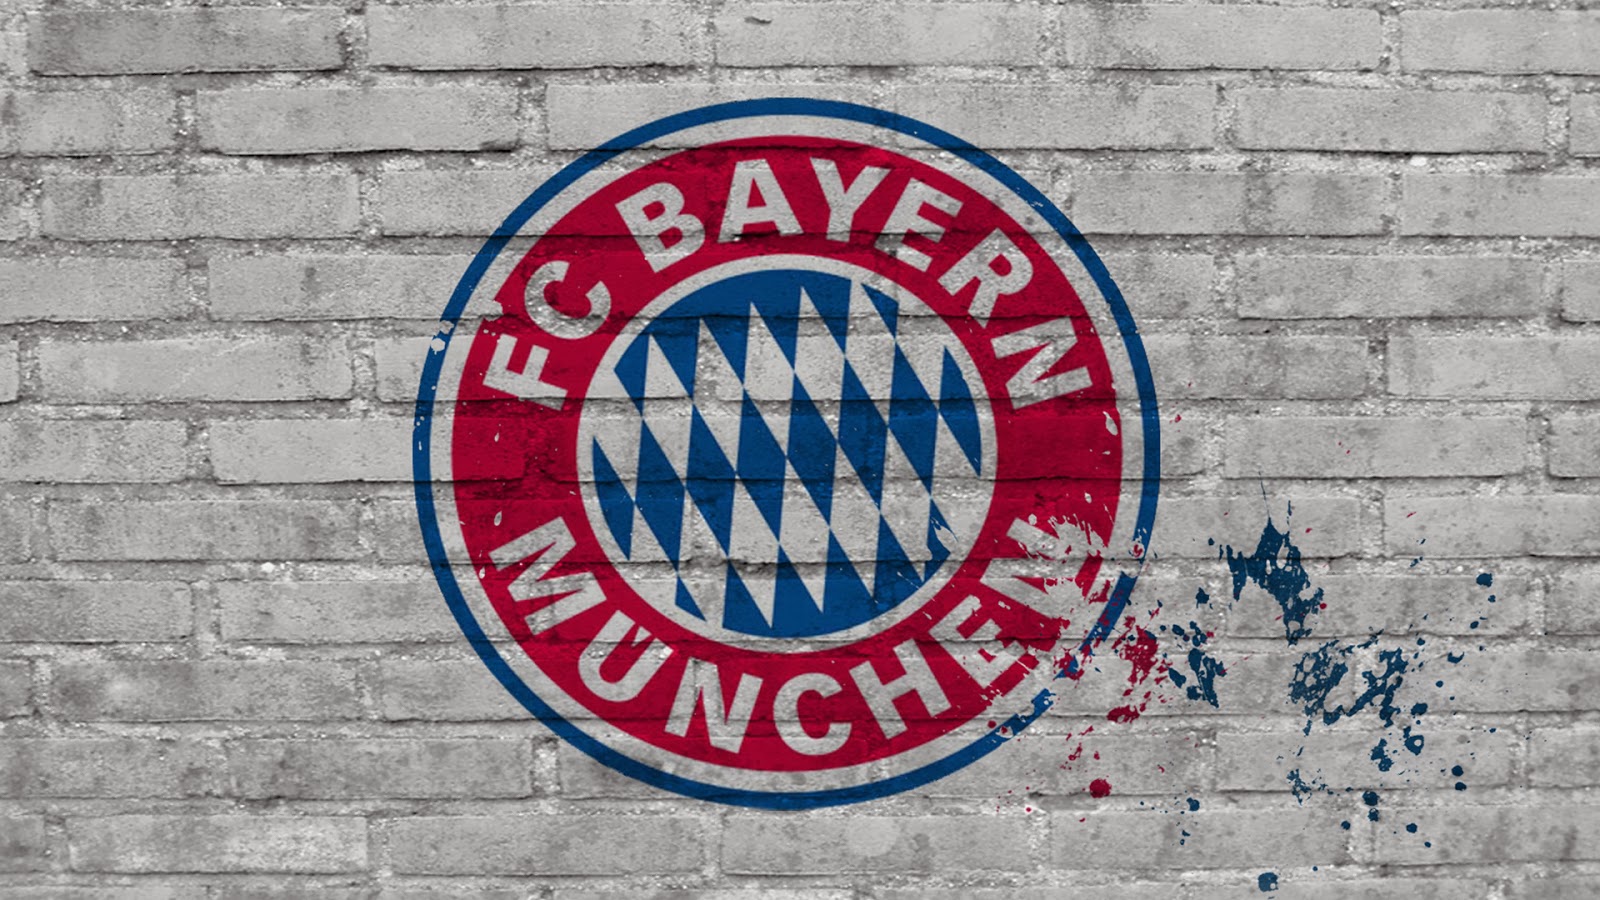 Fc Bayern Munchen Wallpaper Pictures